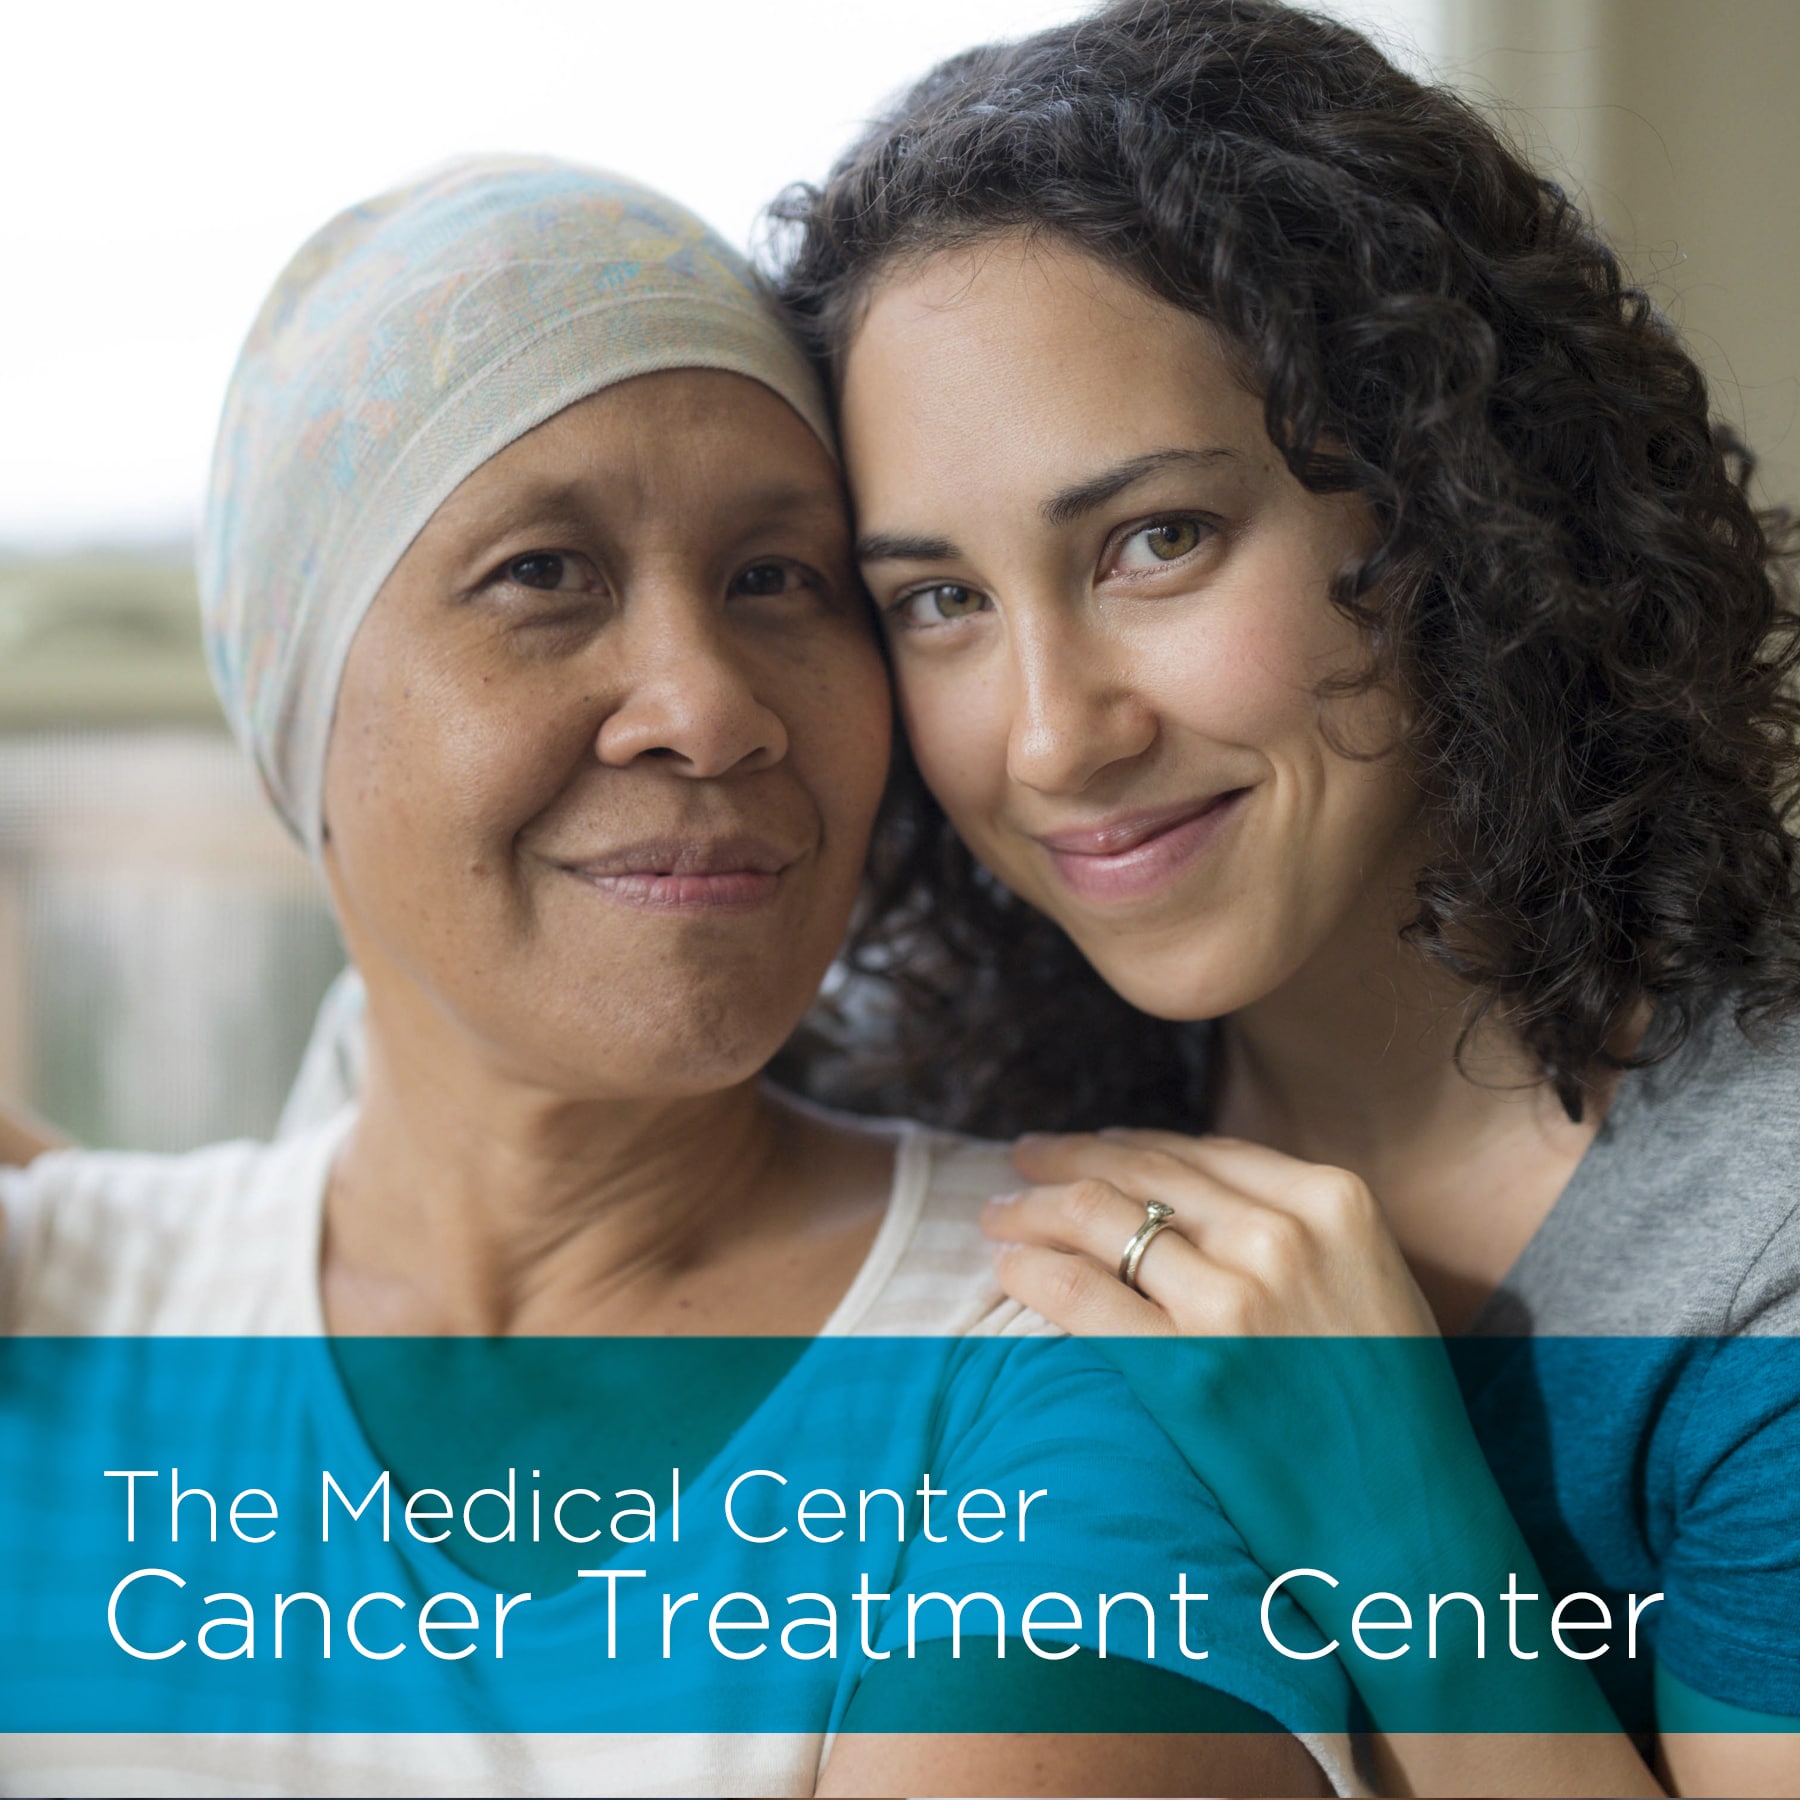 The Medical Center Cancer Treatment Center